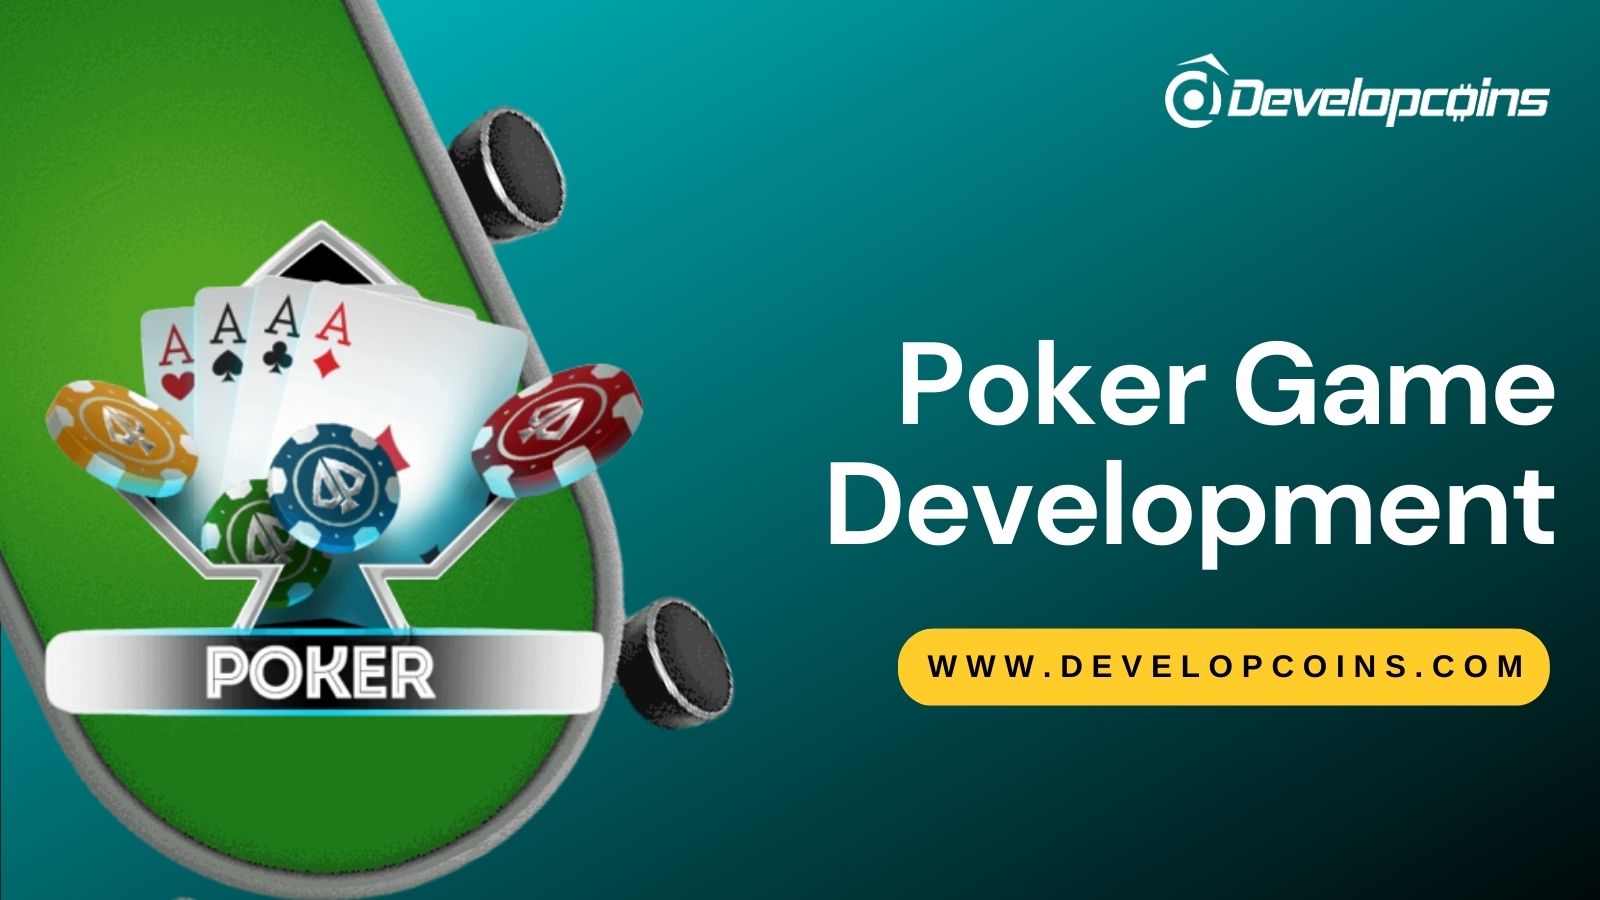 Poker Game Development: A Million Dollar Business Solution